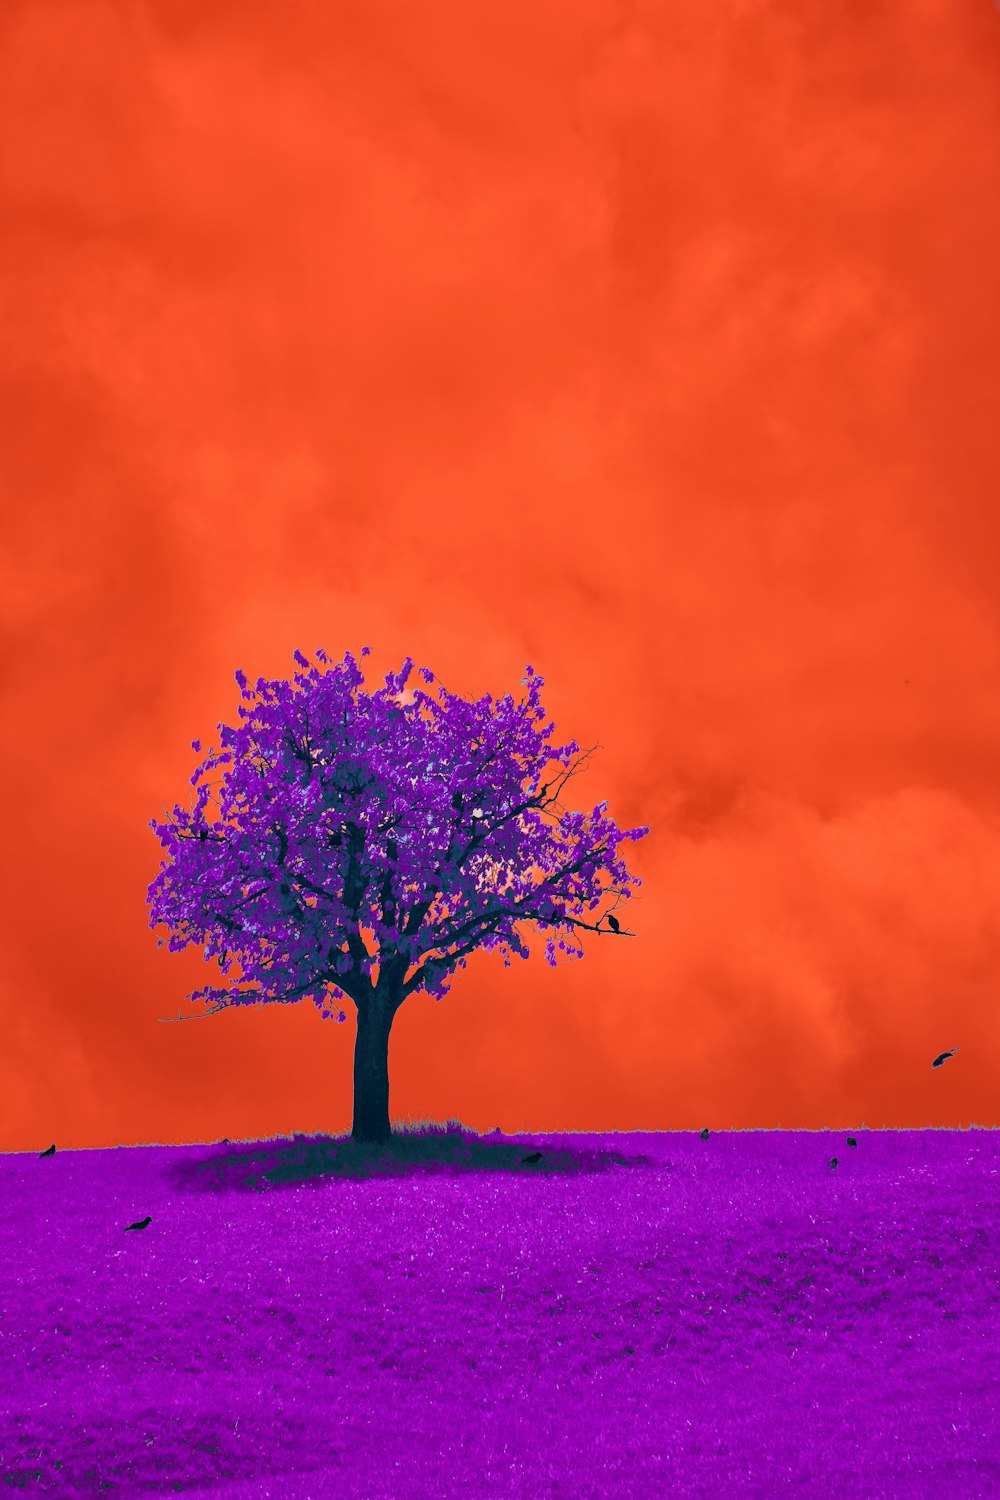 a lone tree in a purple field under a red sky